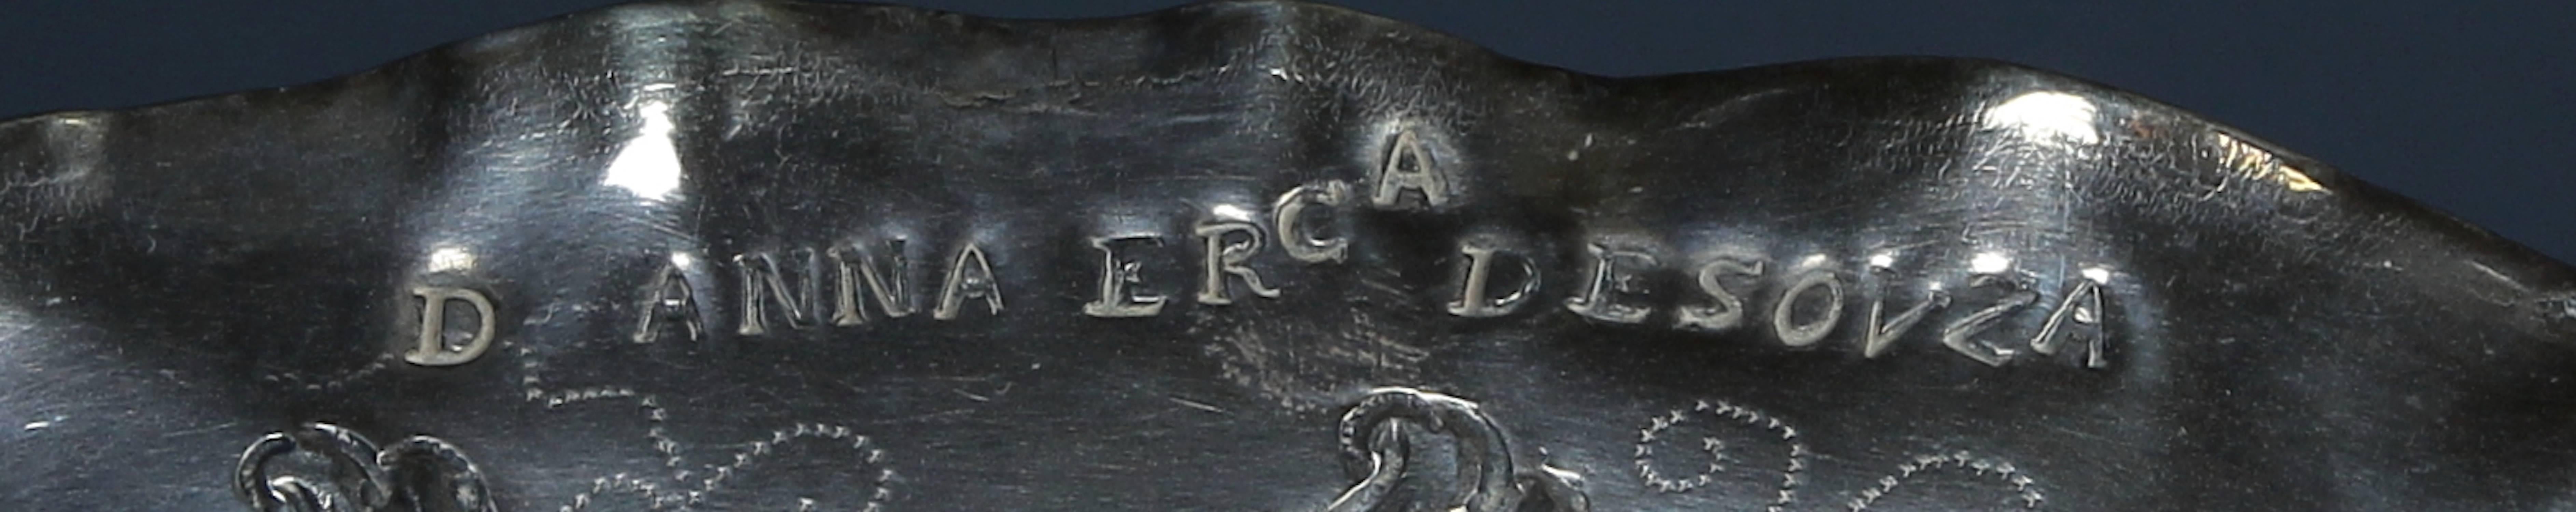 17th Century 17th-18th Century Portuguese Silver Tray For Sale